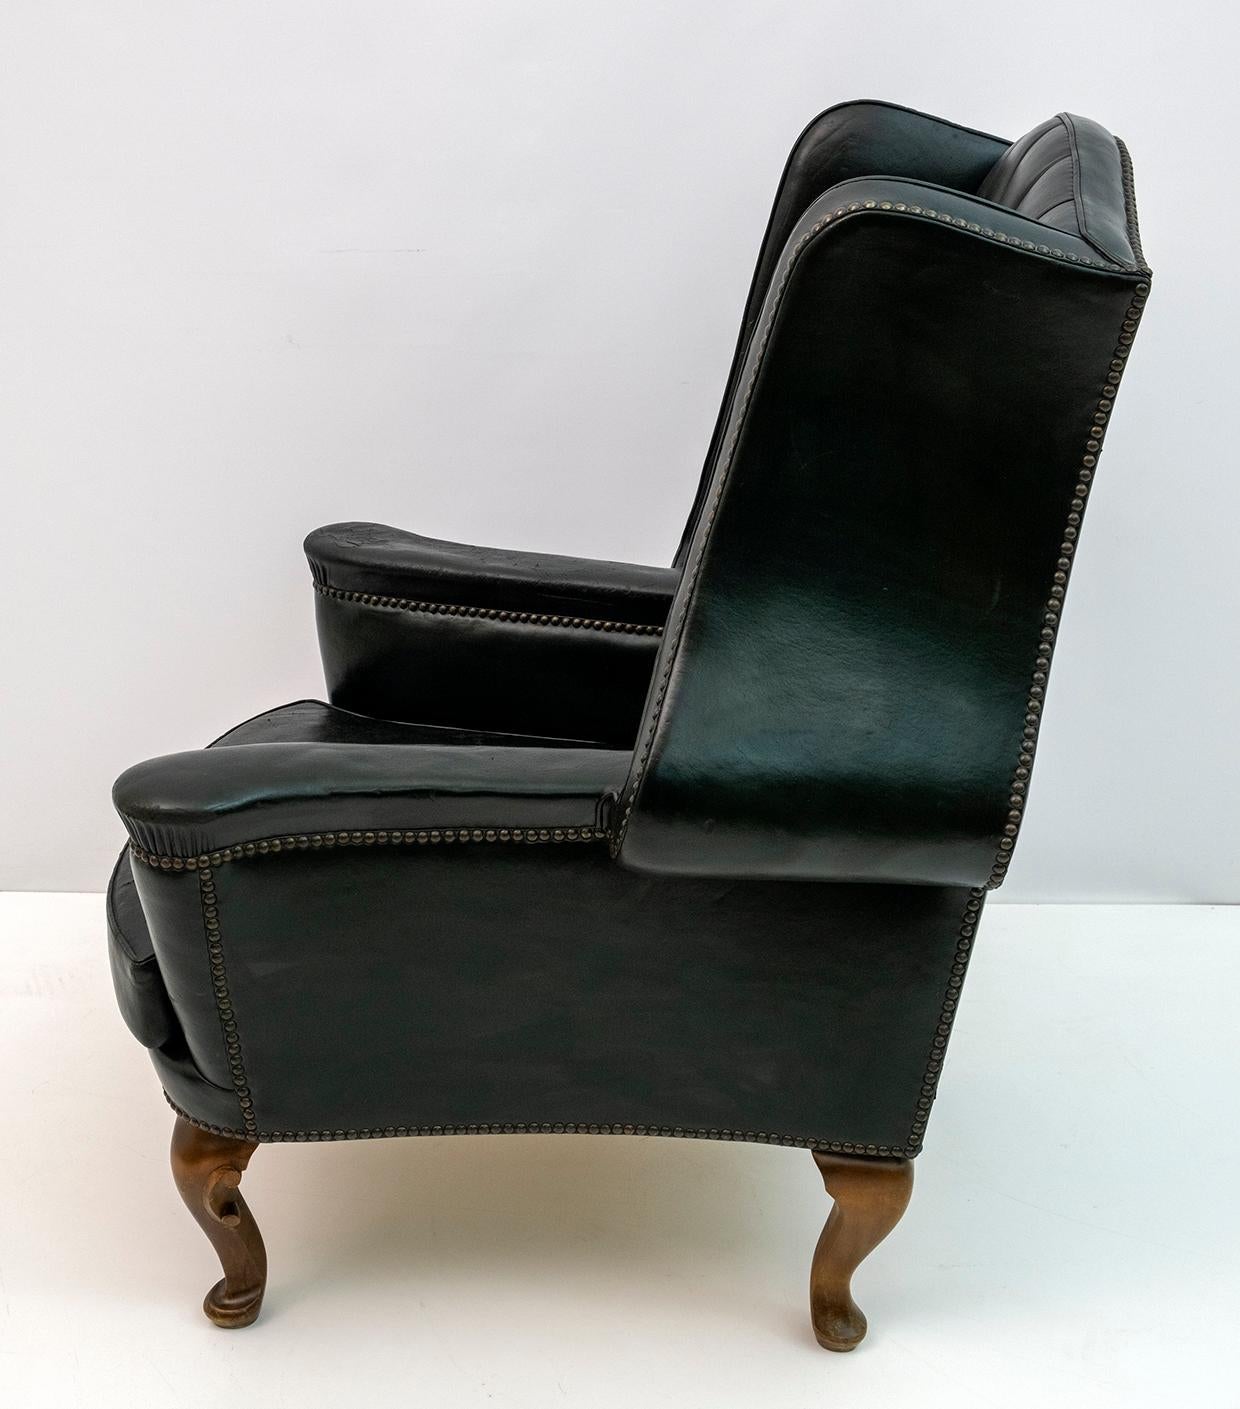 Georgian Style Rare Original Chesterfield Leather Armchair, 1950s For Sale 1